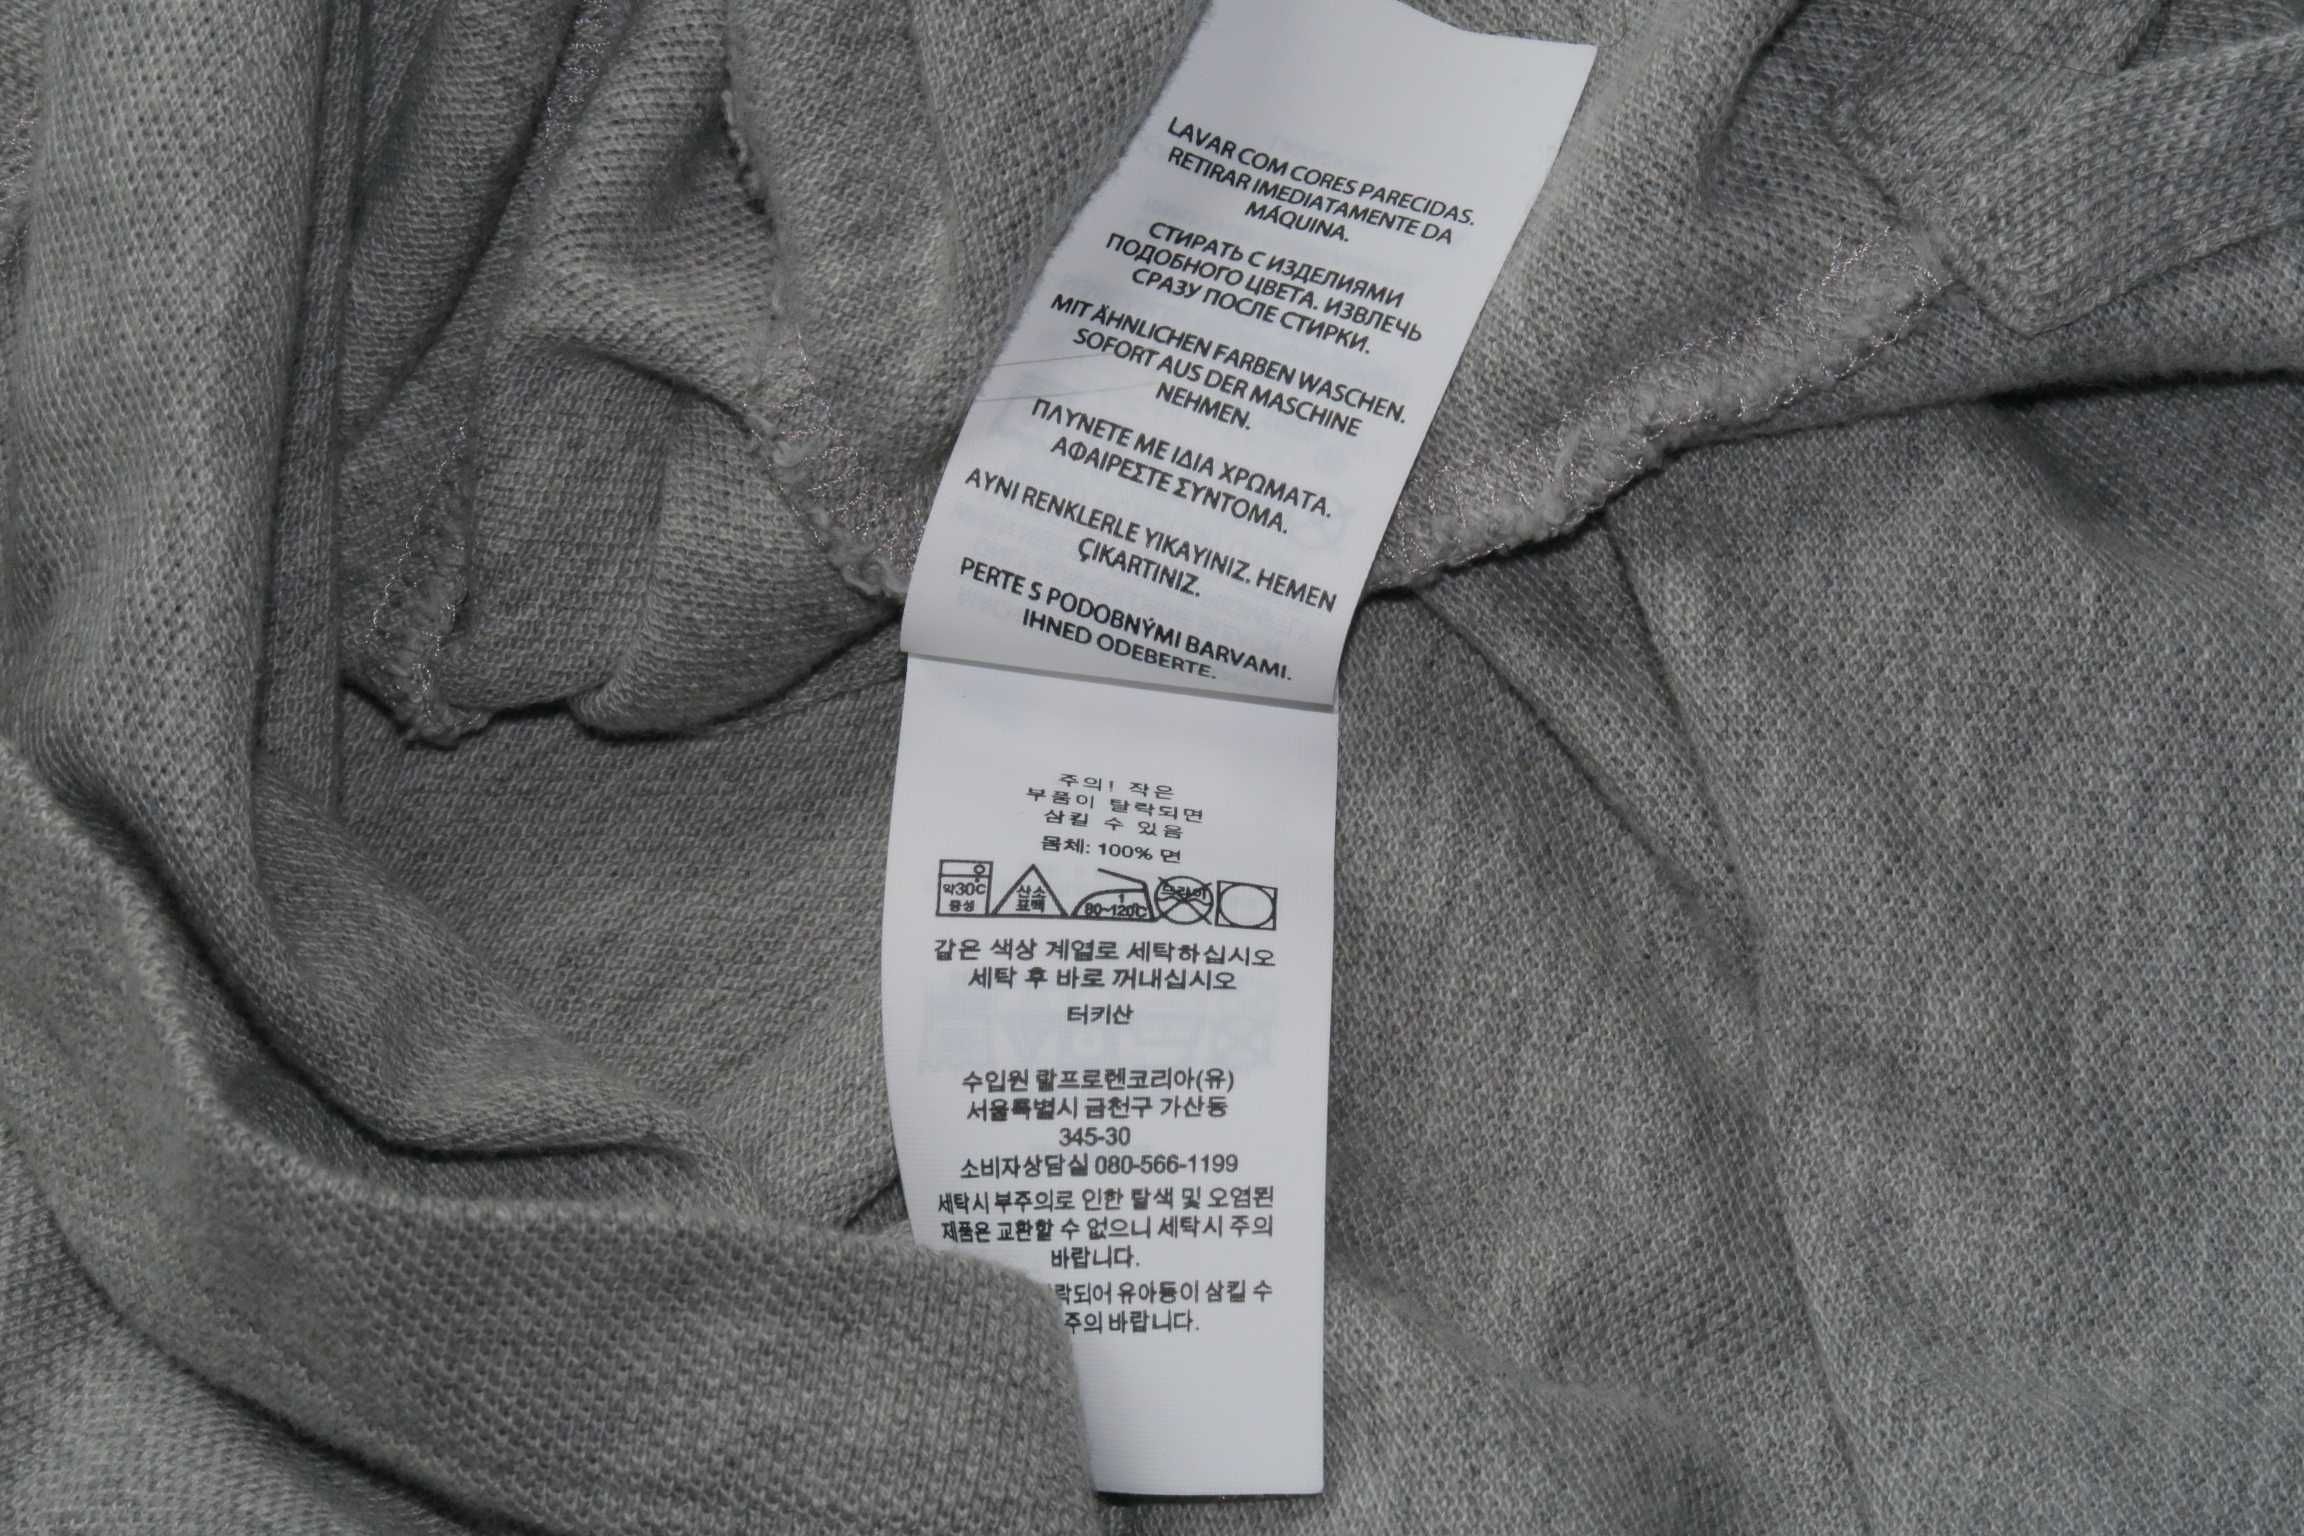 Ralph Lauren koszulka polo nowsze kolekcje 2/3XL